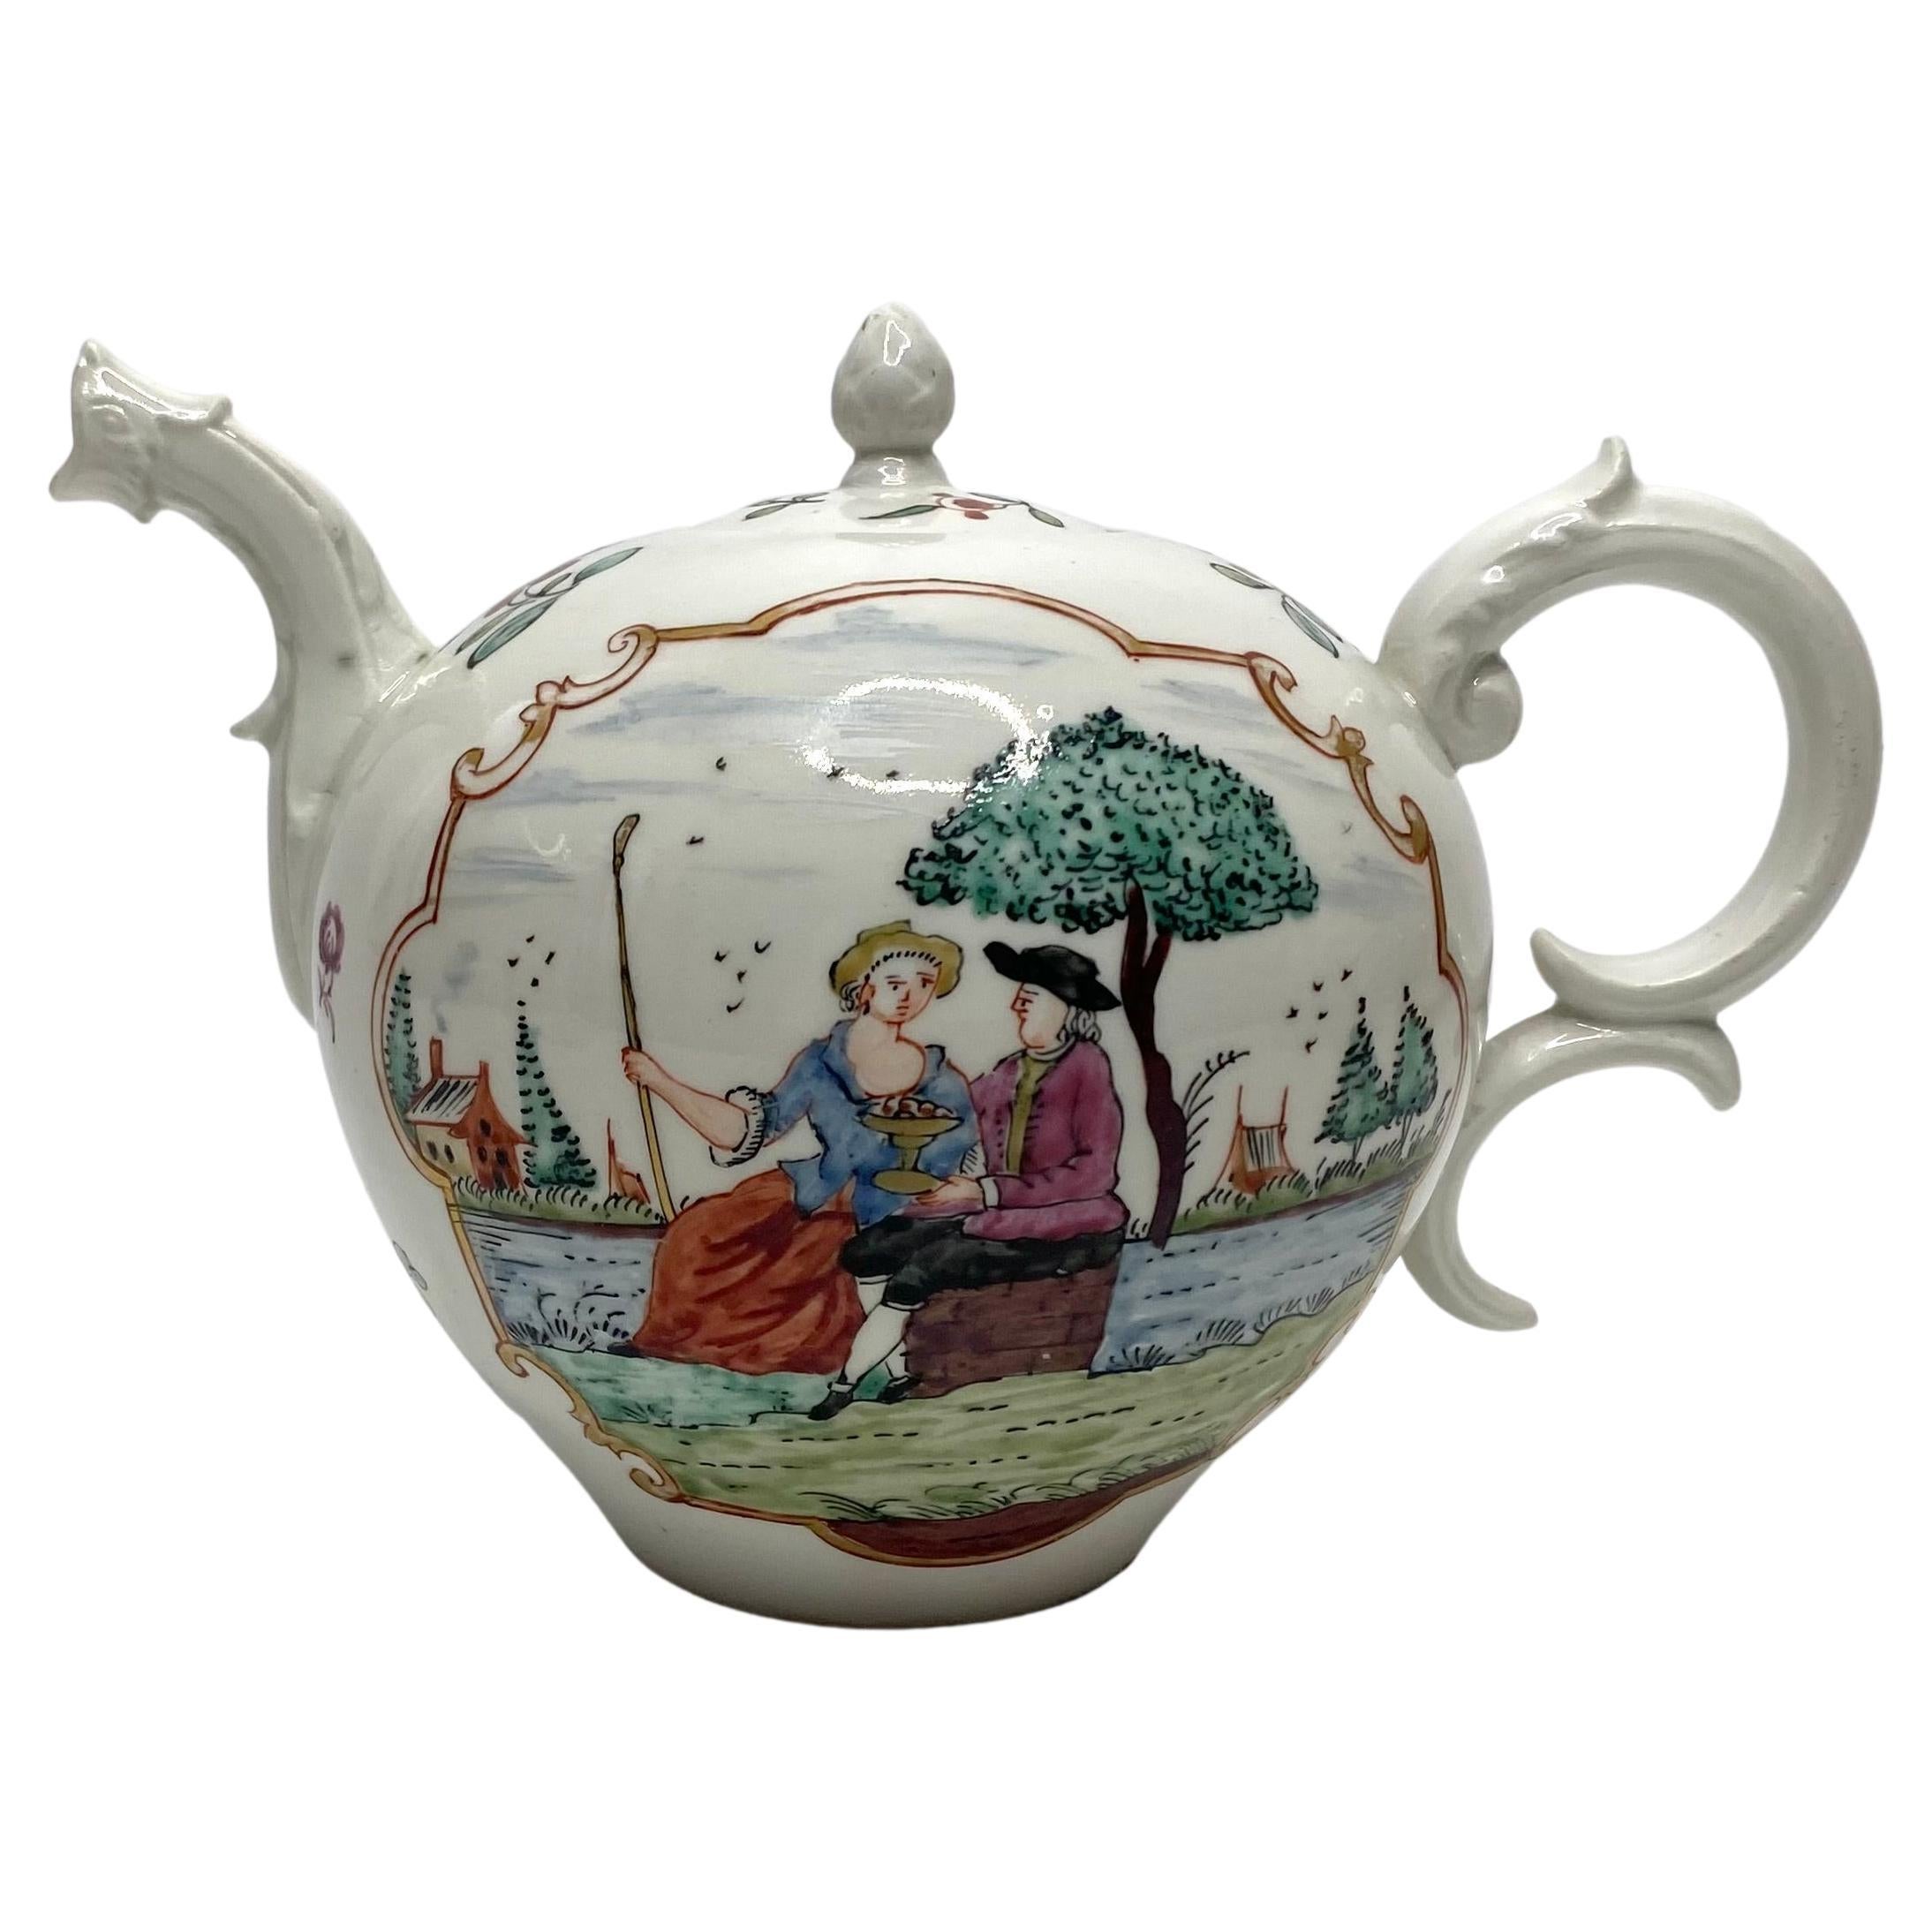 Hochst porcelain teapot & cover, c. 1755. For Sale